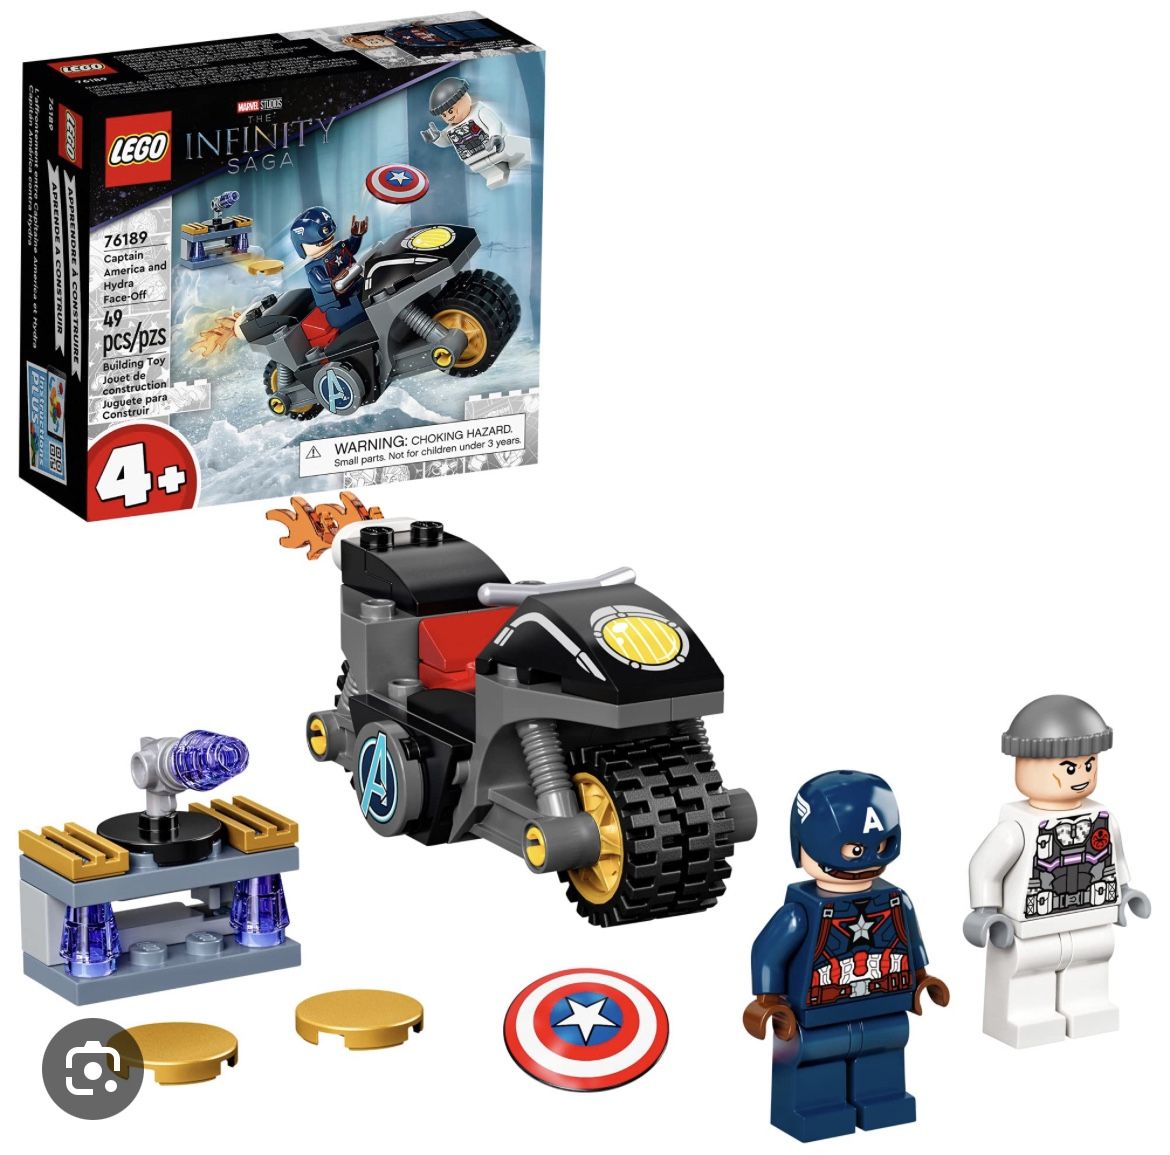 Captain America Lego Set